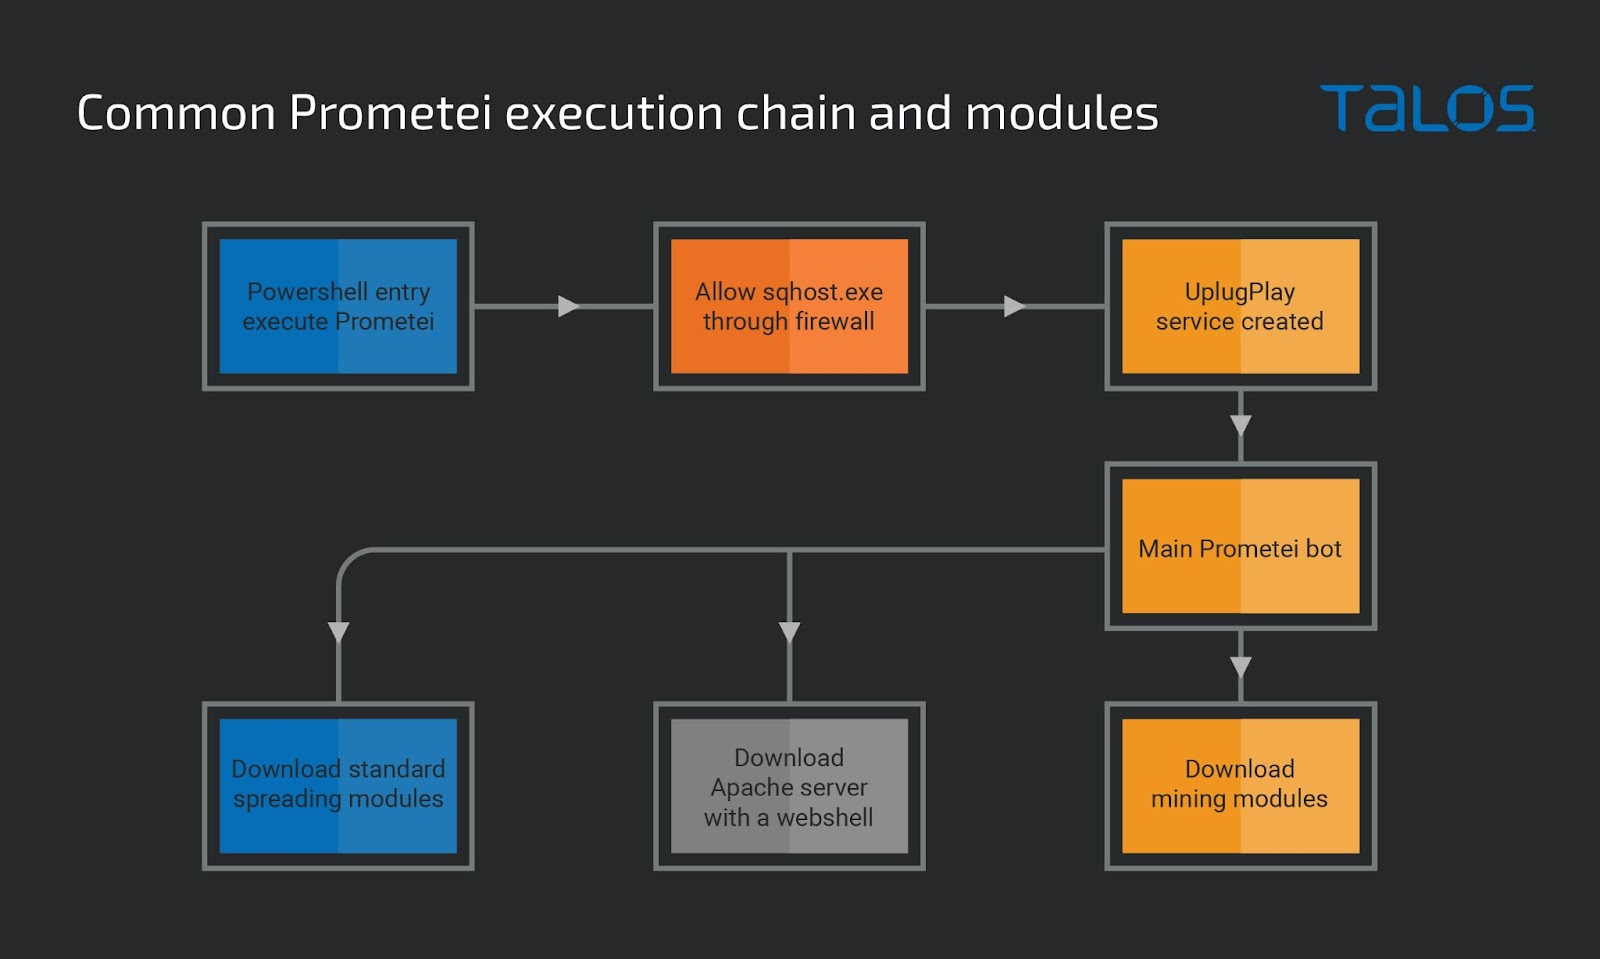 Prometei botnet improves modules and exhibits new capabilities in recent updates